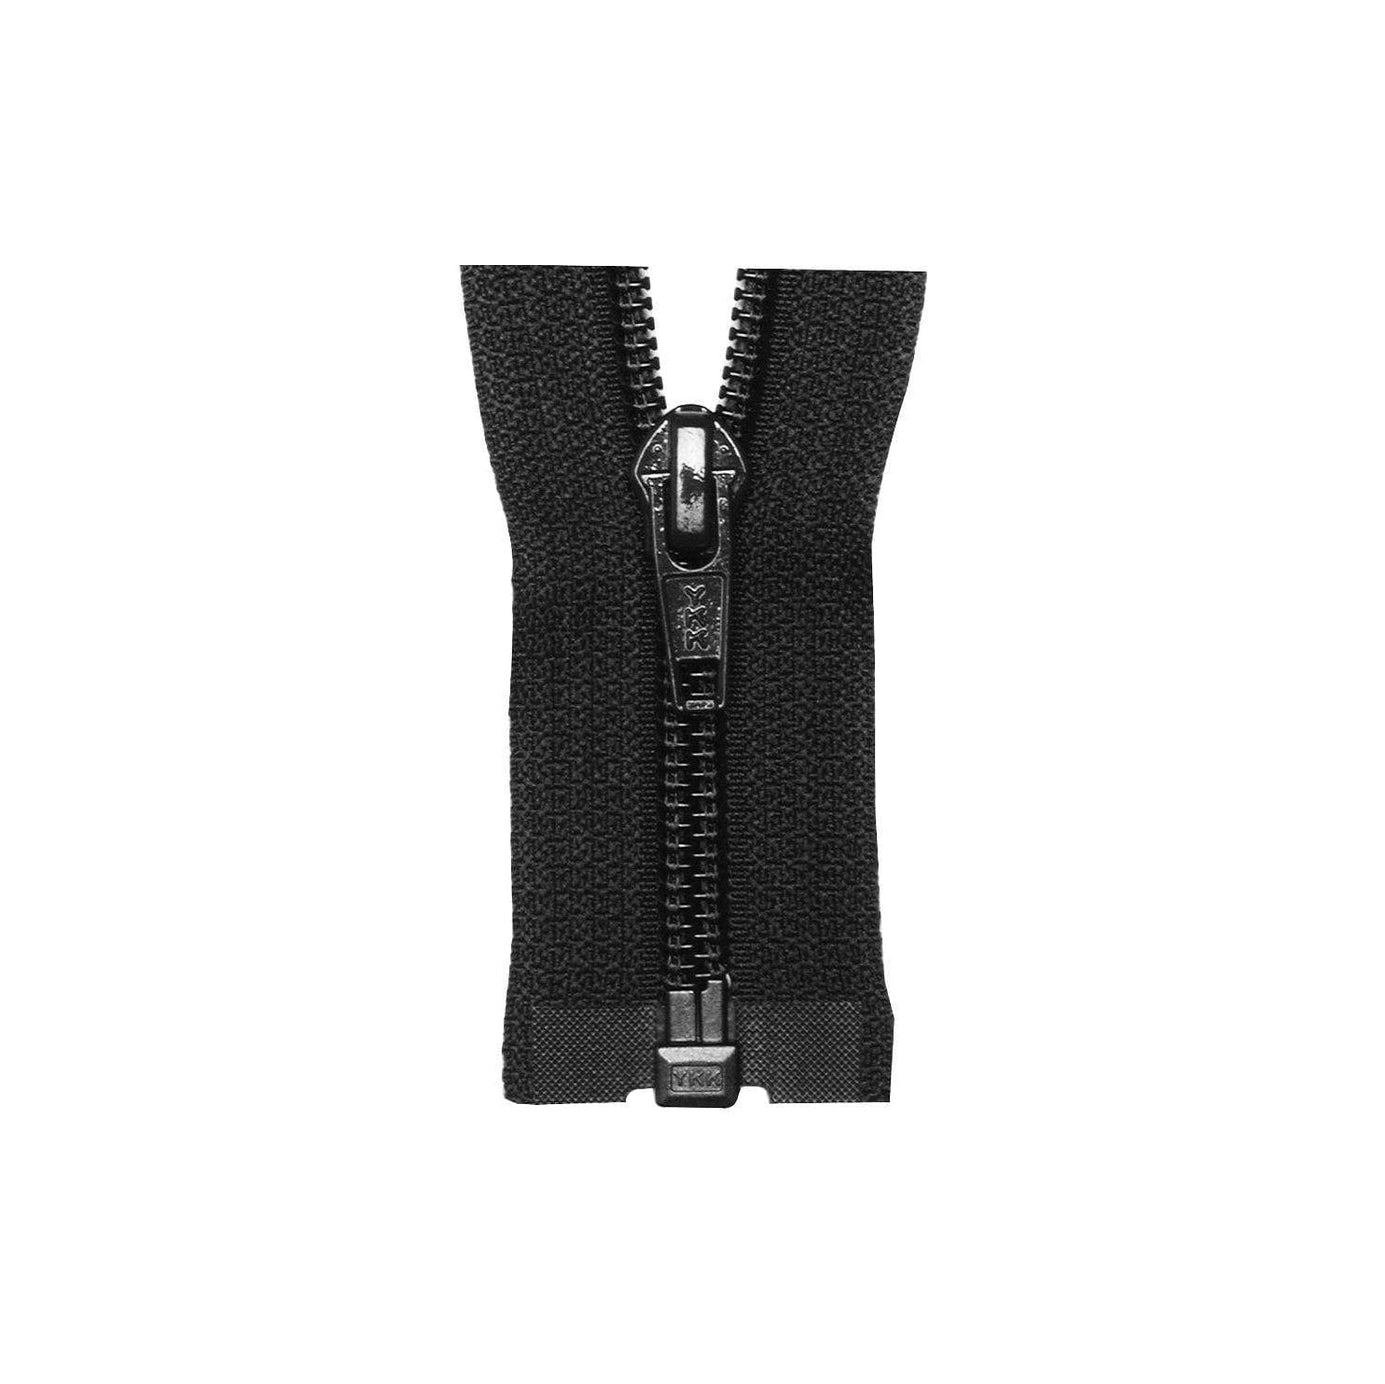 #5 Coil, Black, 26" YKK Separating Jacket Zipper, Nylon, #5CF-26-BLK